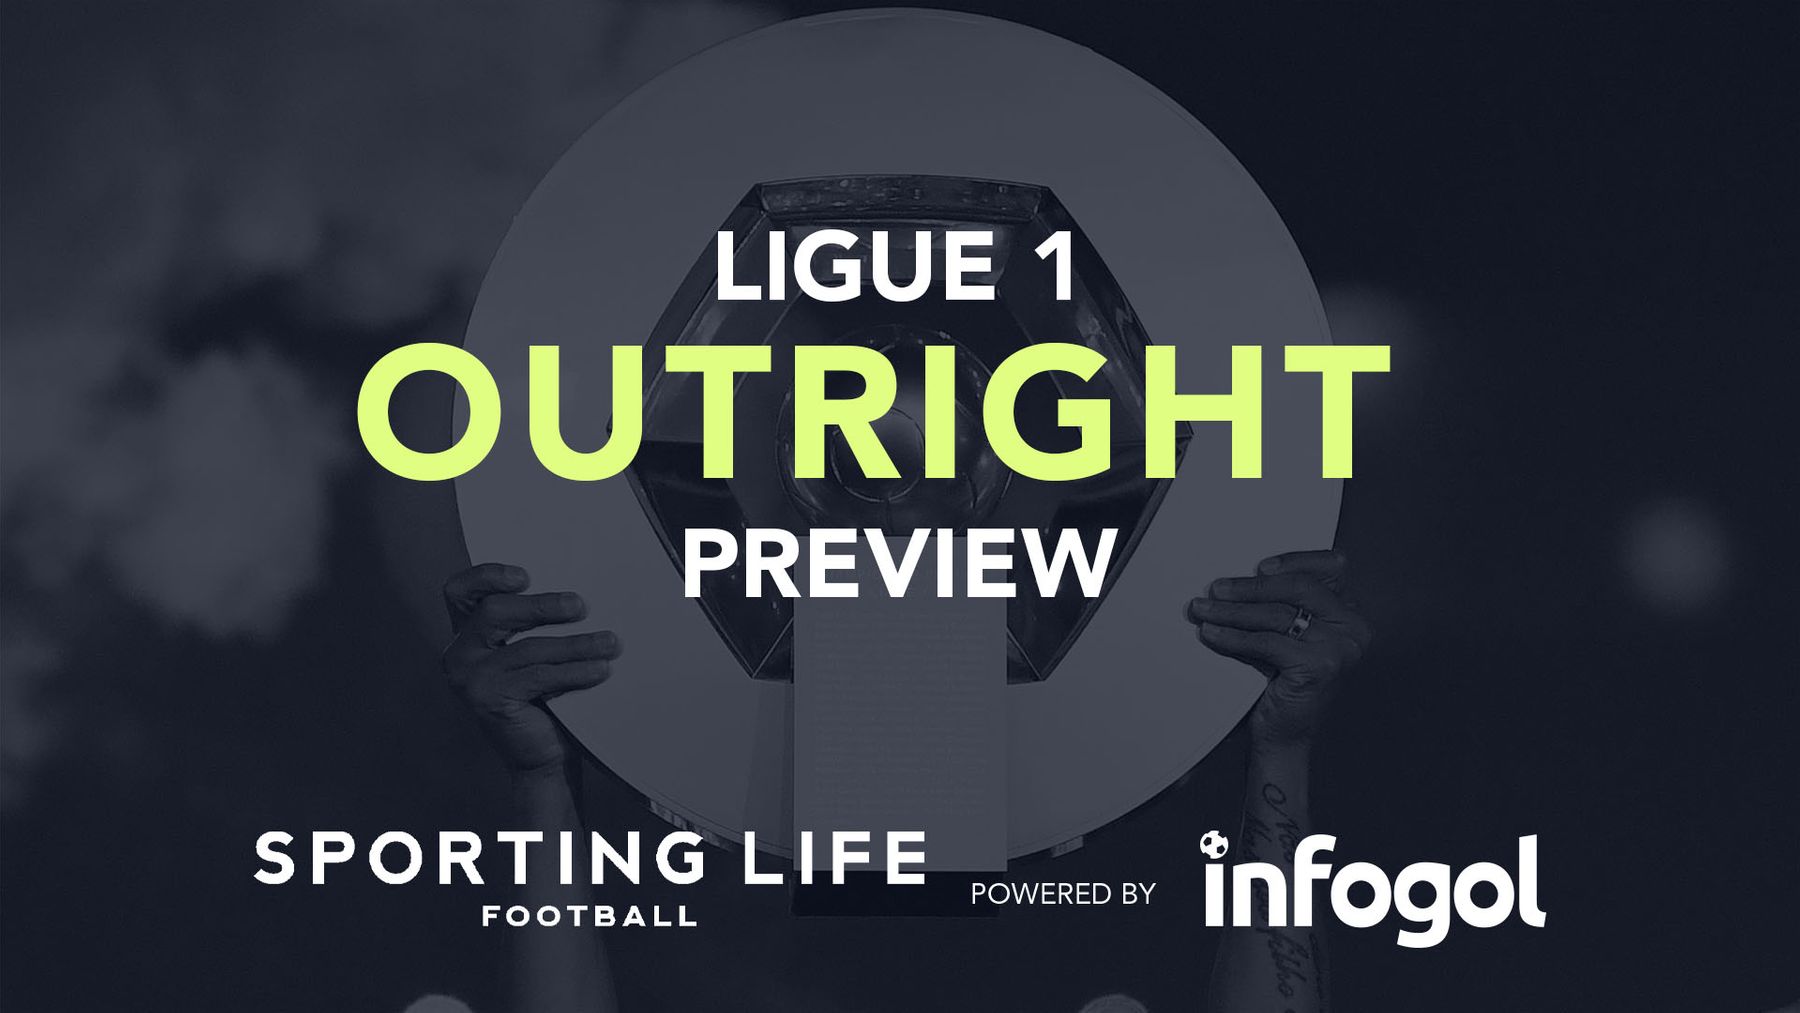 Football Heads: France 2021-22 (Ligue 1) - Play on Dvadi